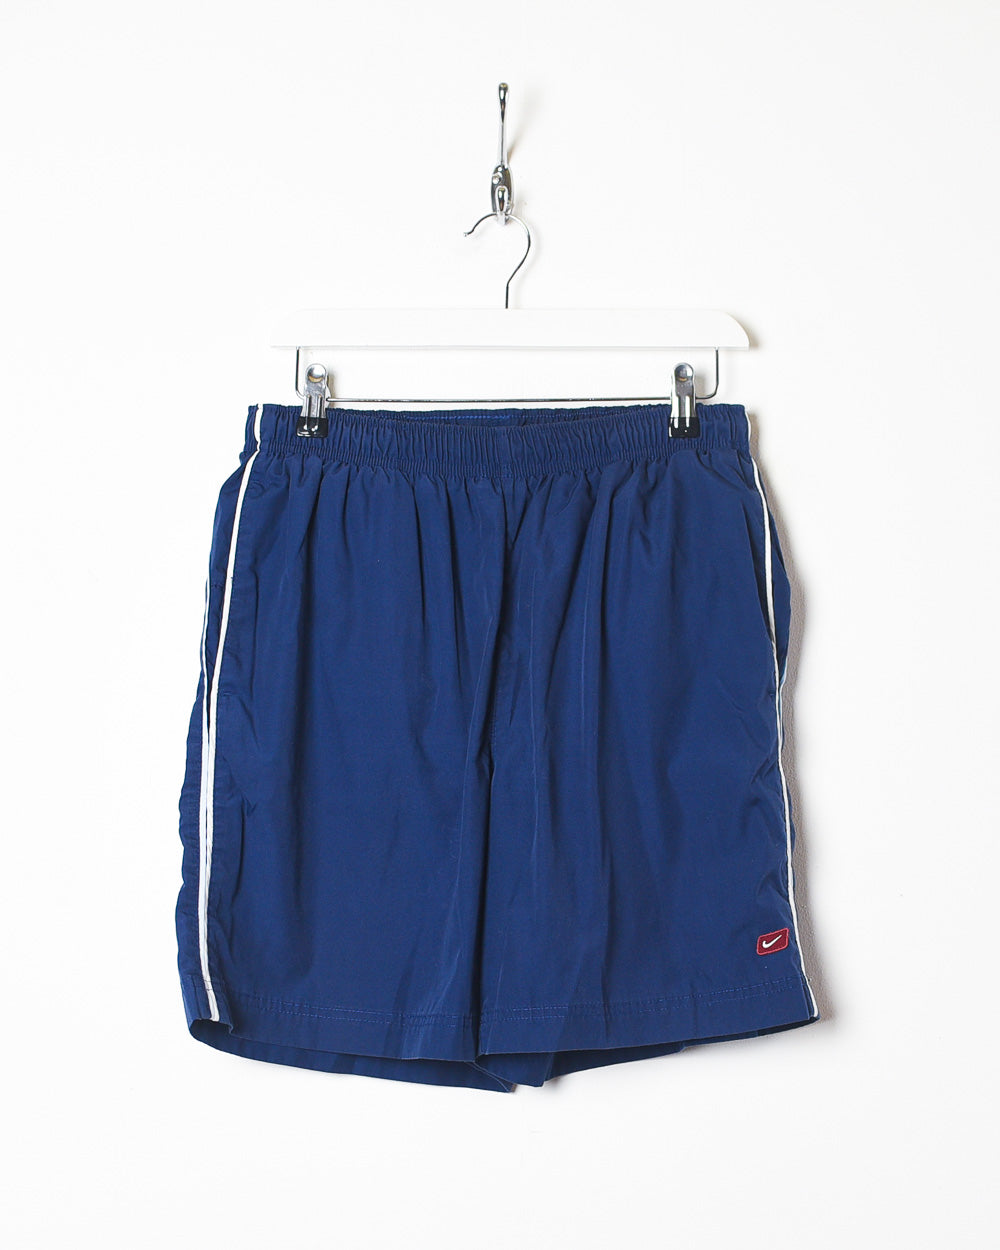 Navy Nike Shorts - Medium